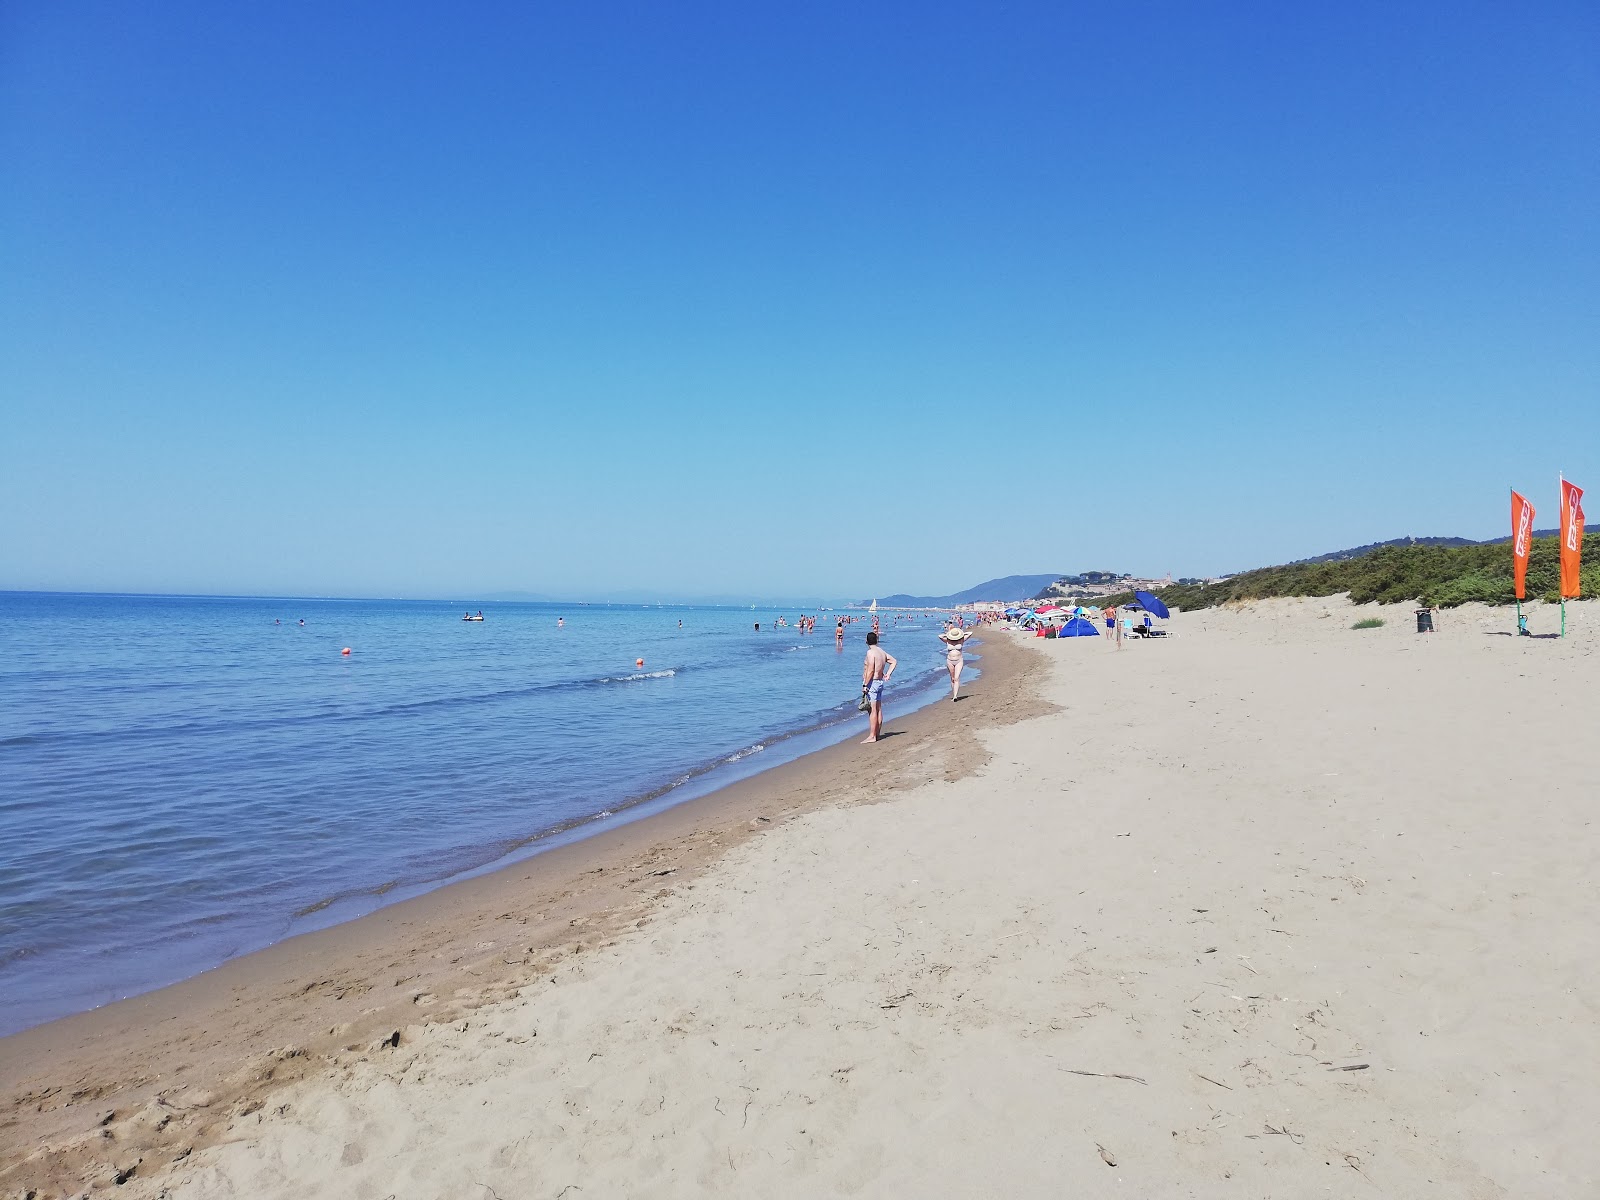 Foto av Spiaggia Delle Marze med ljus sand yta